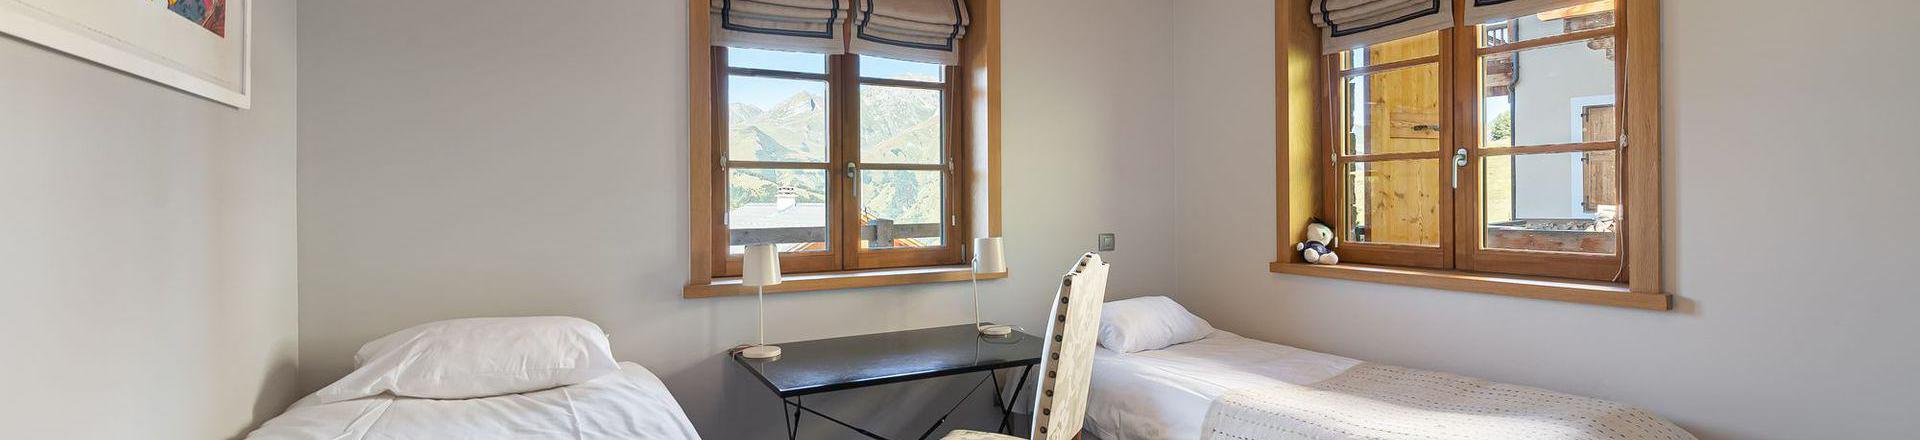 Rent in ski resort 8 room chalet 12 people - Chalet Voland - Saint Martin de Belleville - Apartment